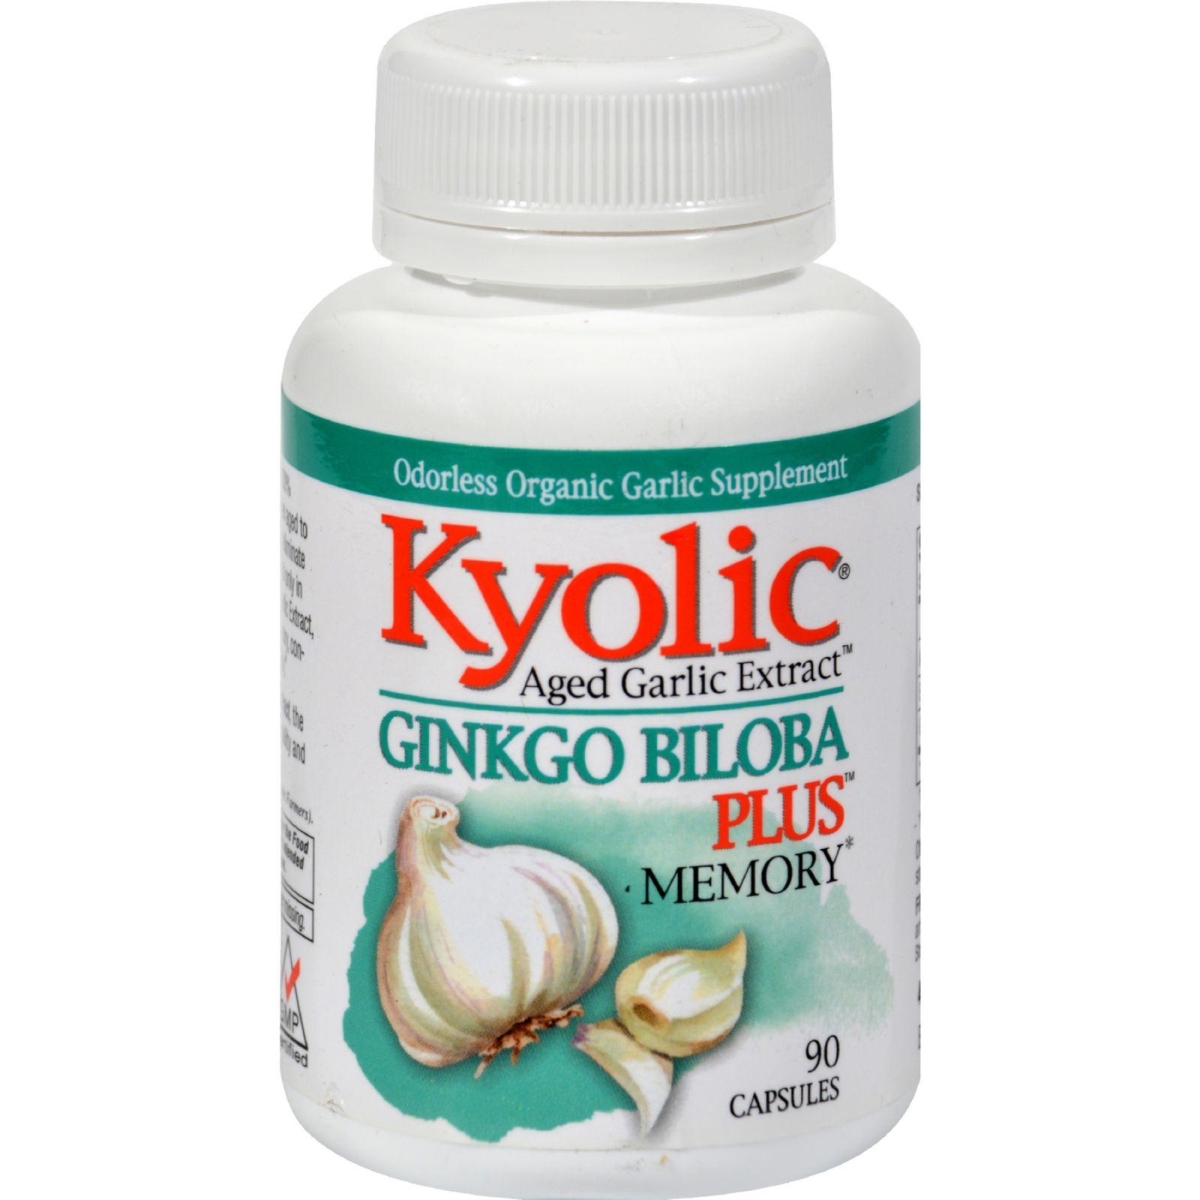 Hg0103127 200 Mg Aged Garlic Extract Ginkgo Biloba Plus Memory, 90 Capsules